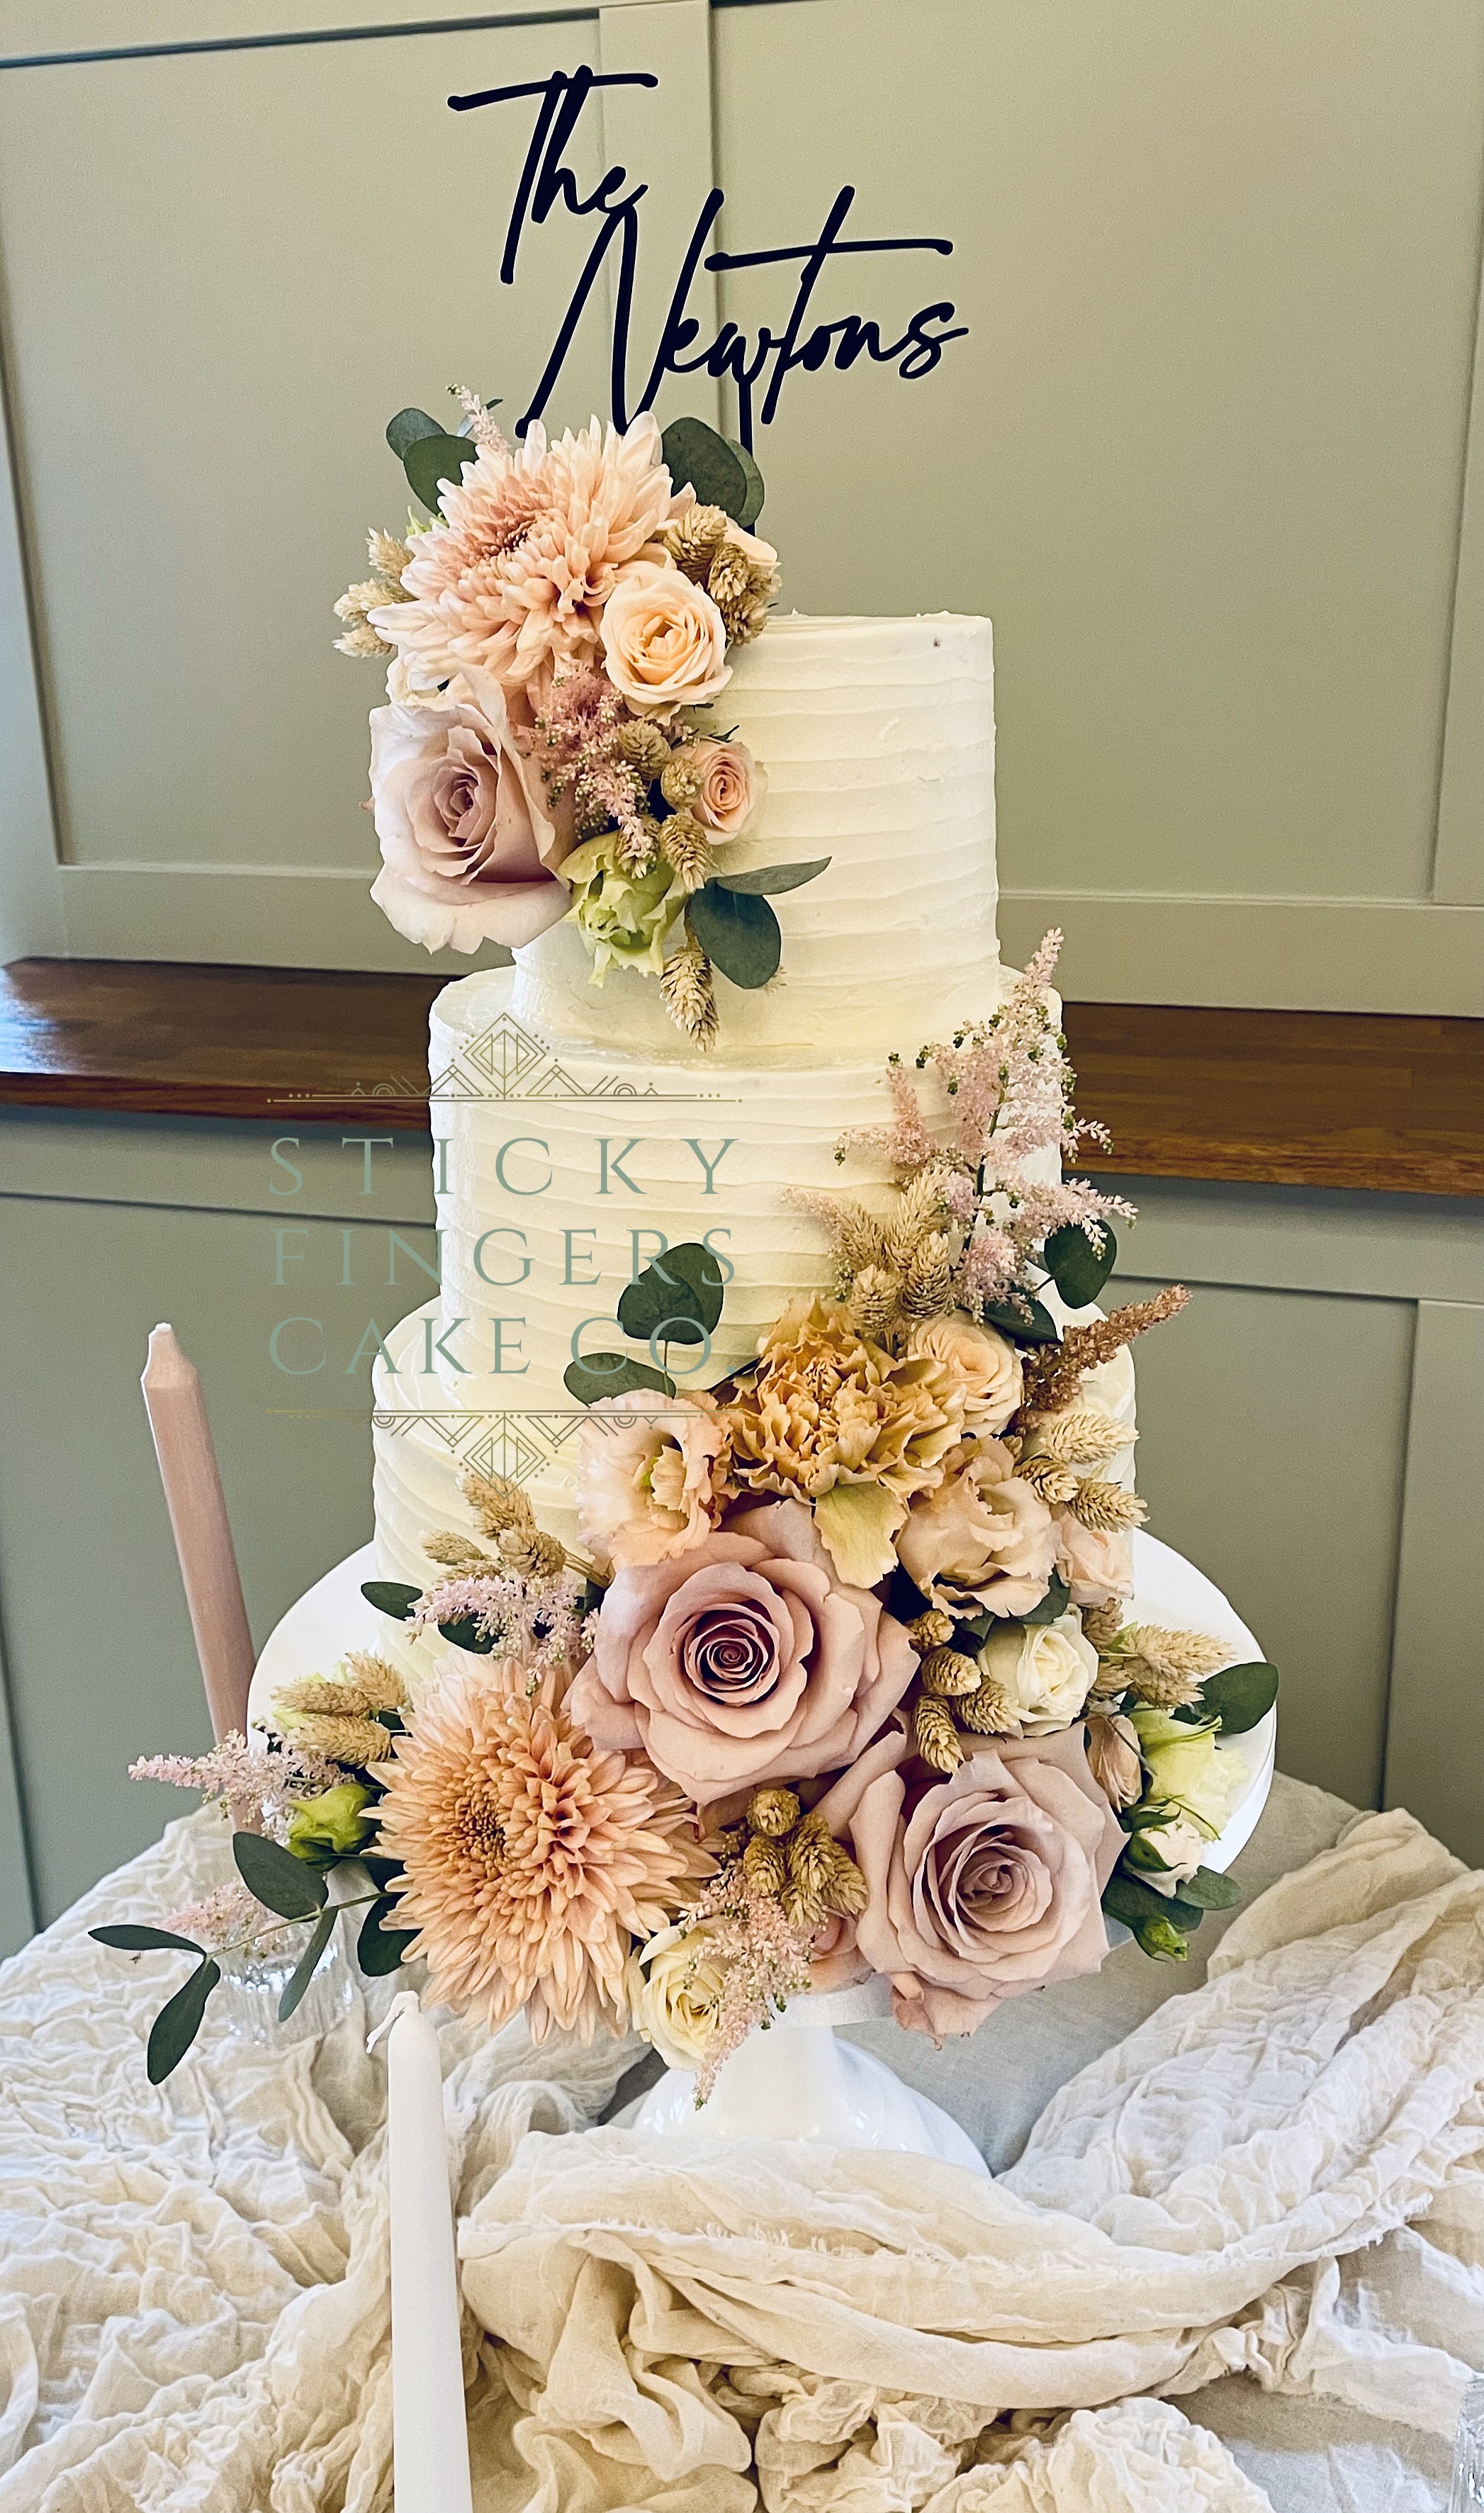 3-tier Buttercream Wedding Cake, Apton Hall, Rochford – August 2022